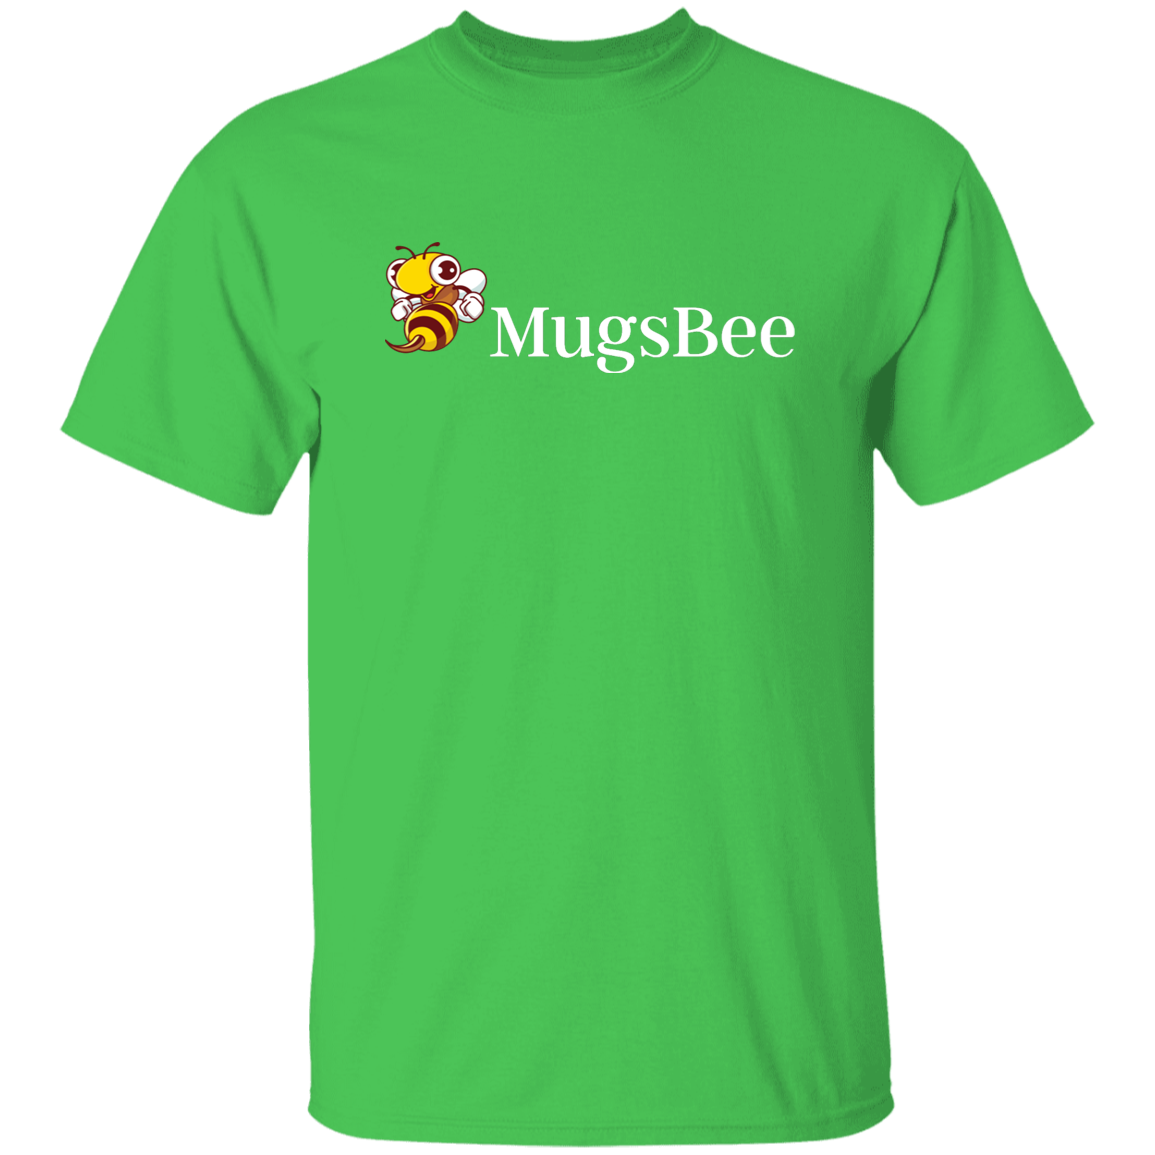 Men's T-Shirt - Classic MugsBee